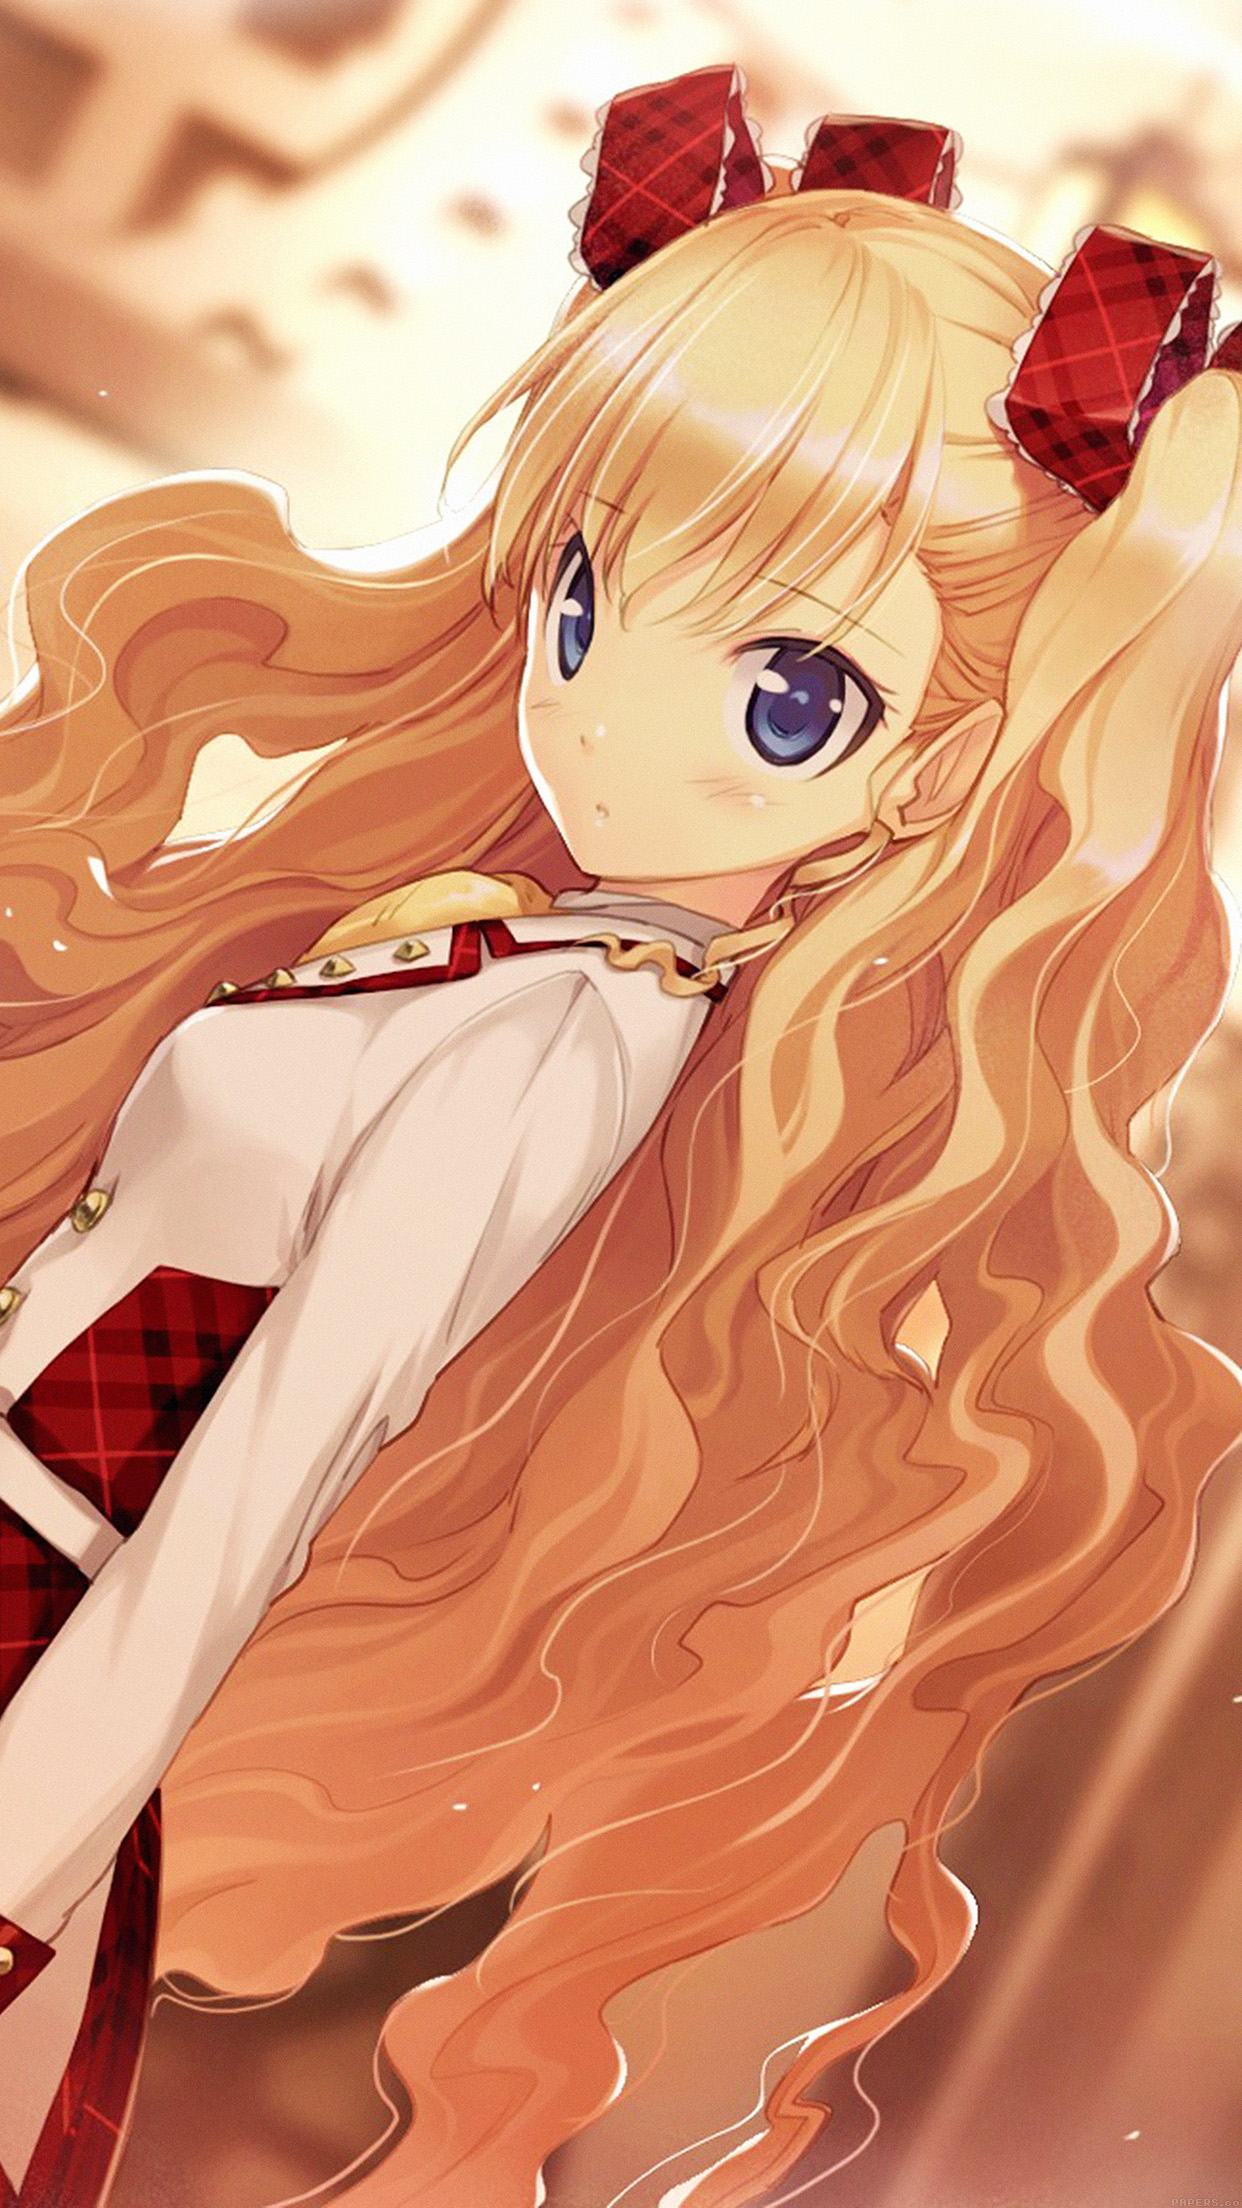 Anime Girl Blonde Illust Art Android wallpaper - Android ...